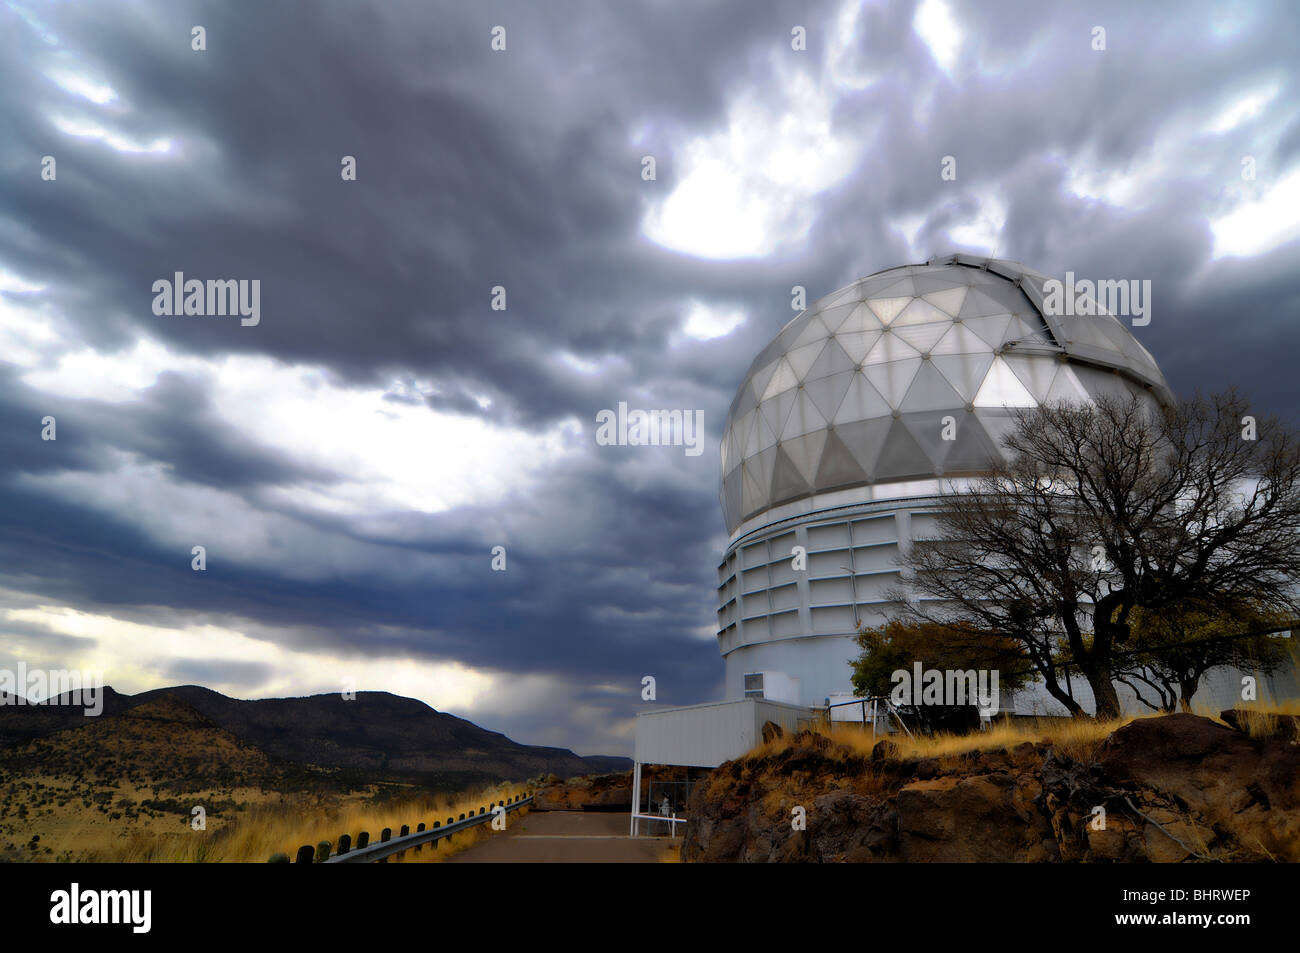 Hobby-Eberly Teleskop Observatorium Kuppel am McDonald-Observatorium, Fort Davis, Texas. Stockfoto